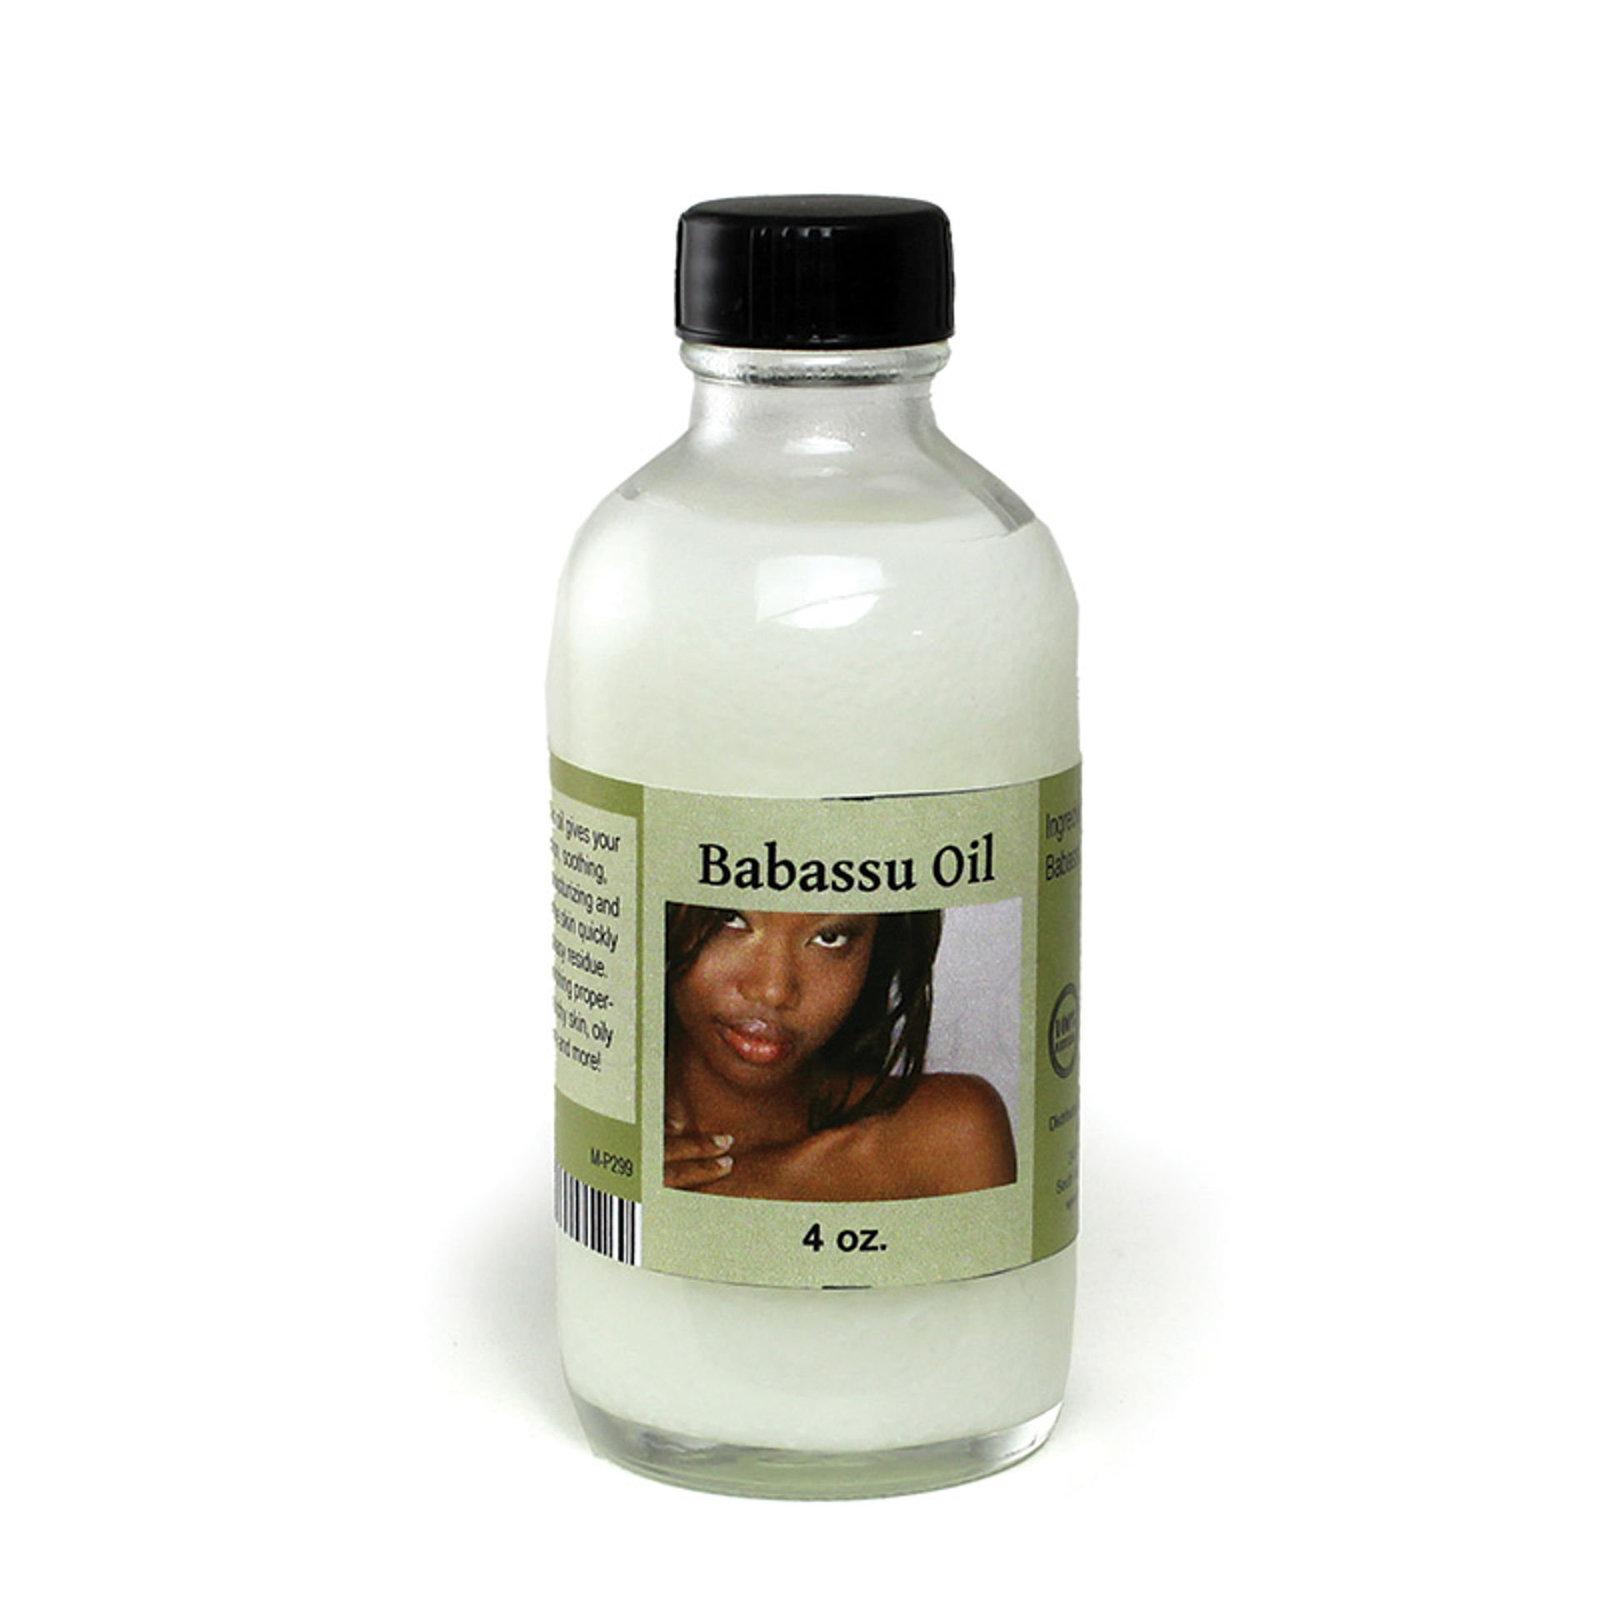 Primary image for Babassu Oil, 100% Babassu oil, Organic - Assorted Sizes